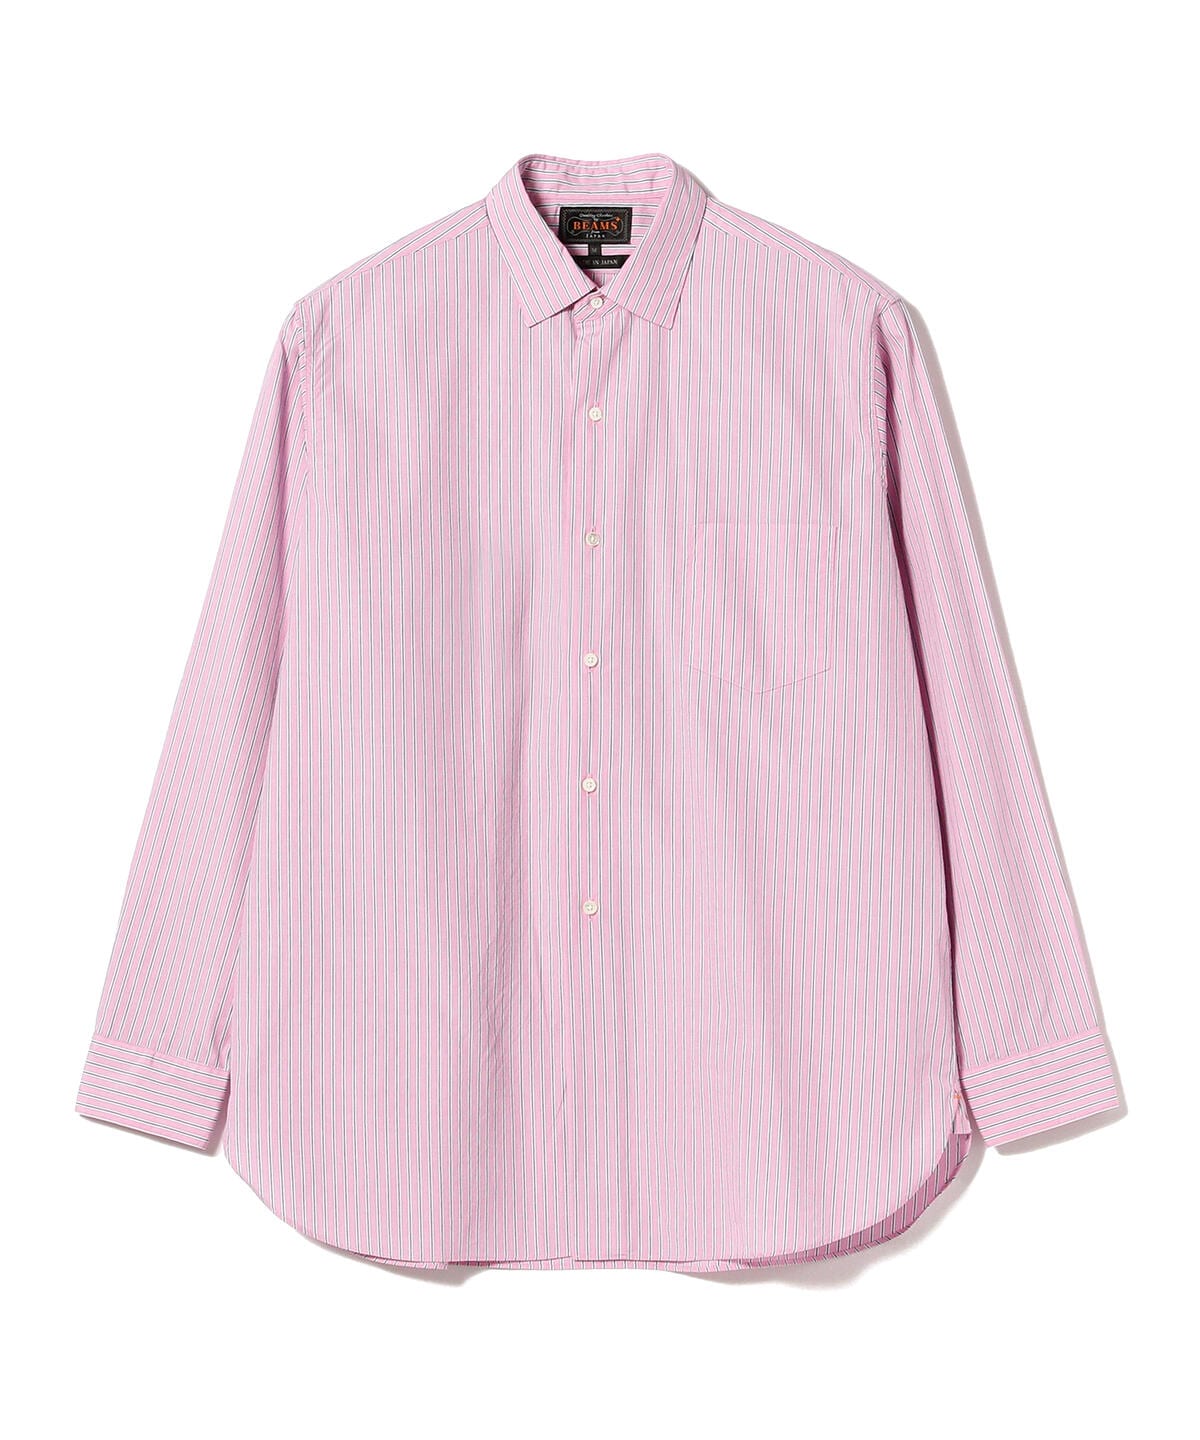 BEAMS PLUS カジュアルシャツ L カーキx紫x青等(総柄)なし開閉 - シャツ